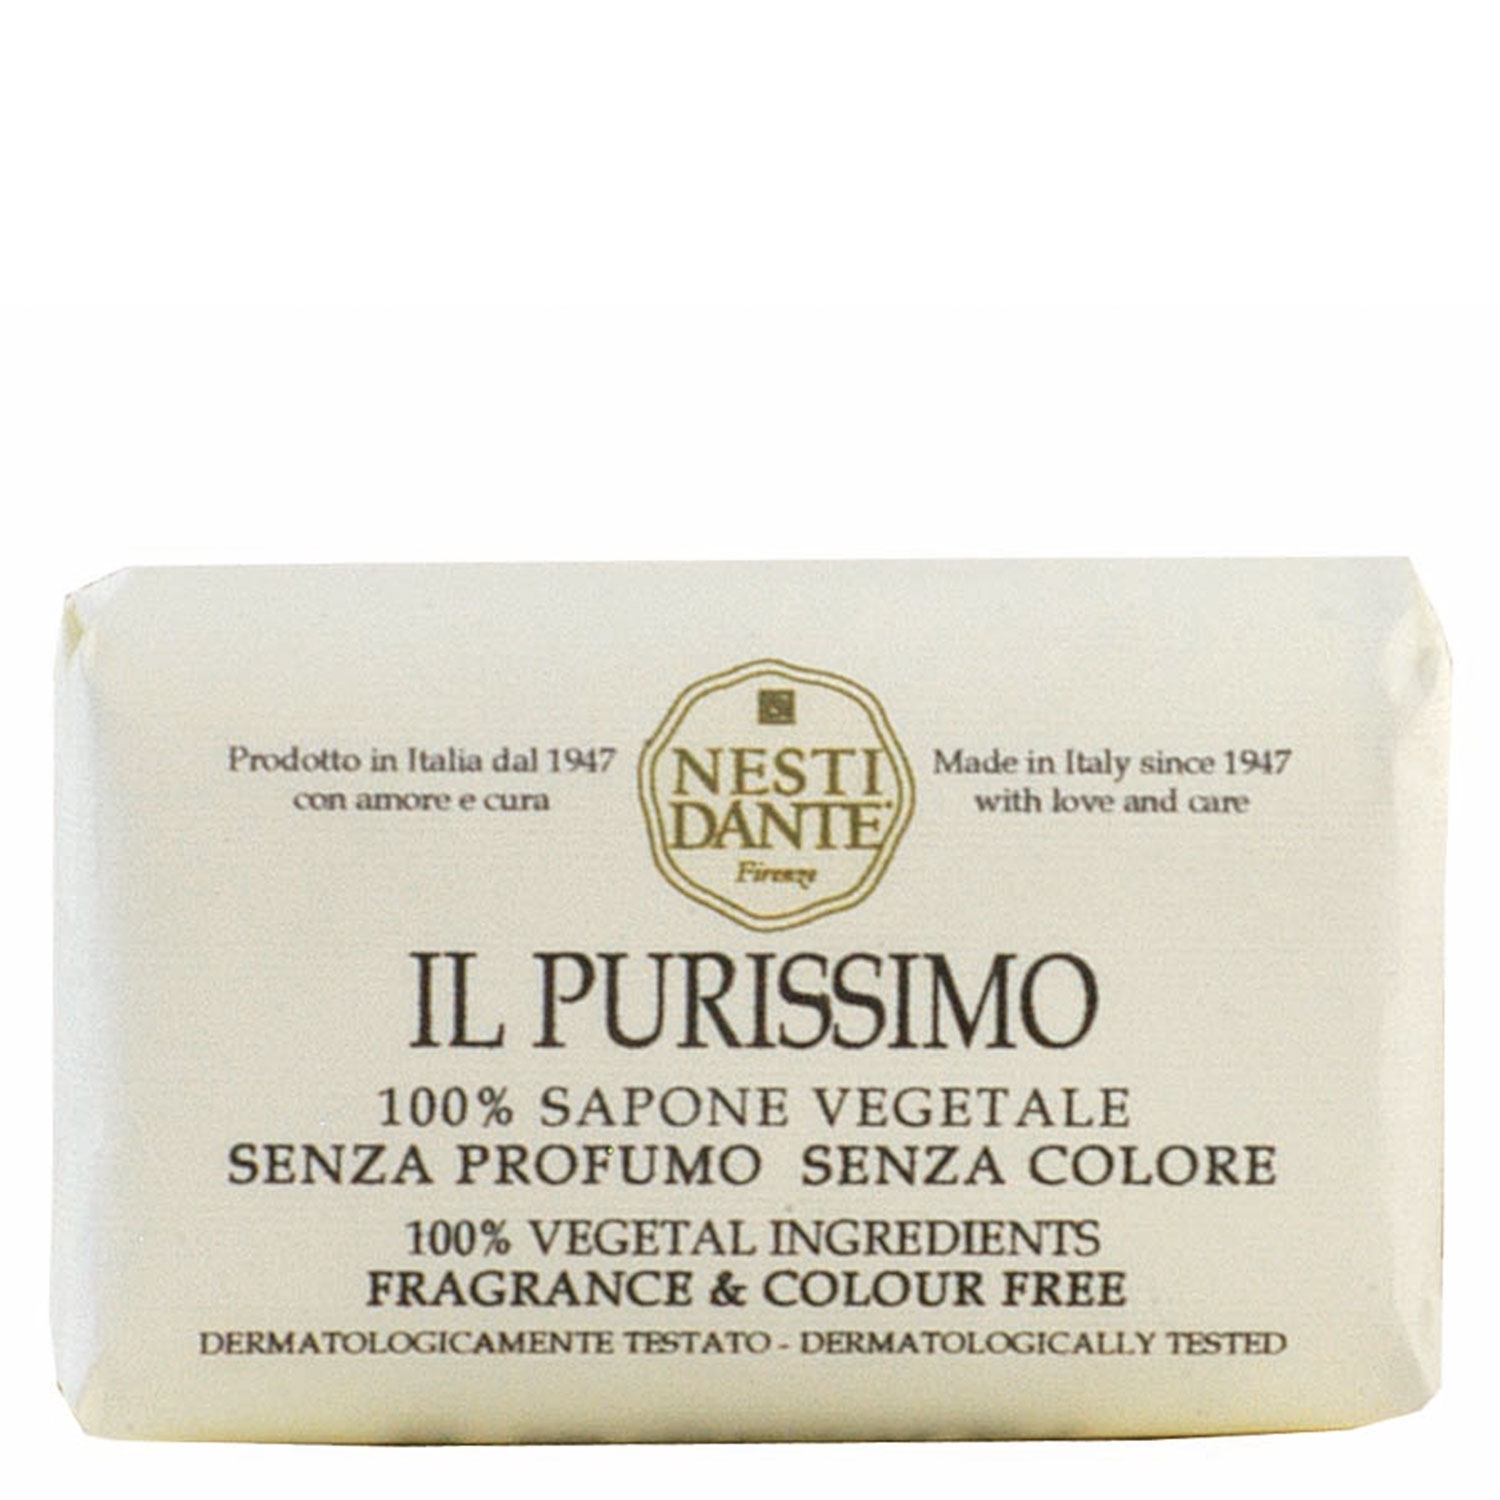 Product image from Nesti Dante - Il Purissimo